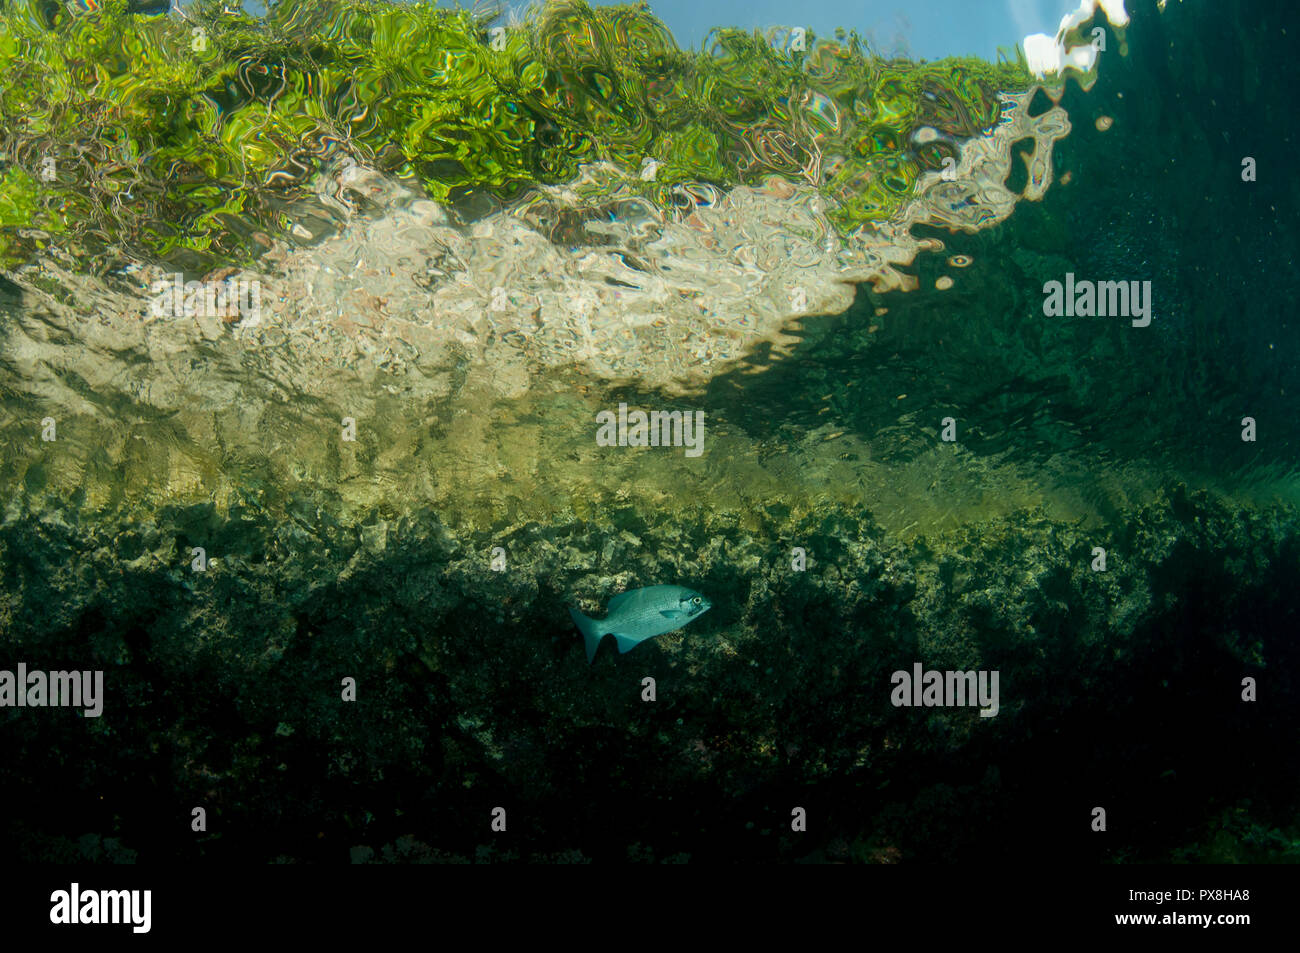 Topsail Chub, Kyphosus cinerascens, with Isopod, Cymothoa sp, parasite with island in background, Kerua Channel, Penemu Island, Raja Ampat, Indonesia Stock Photo